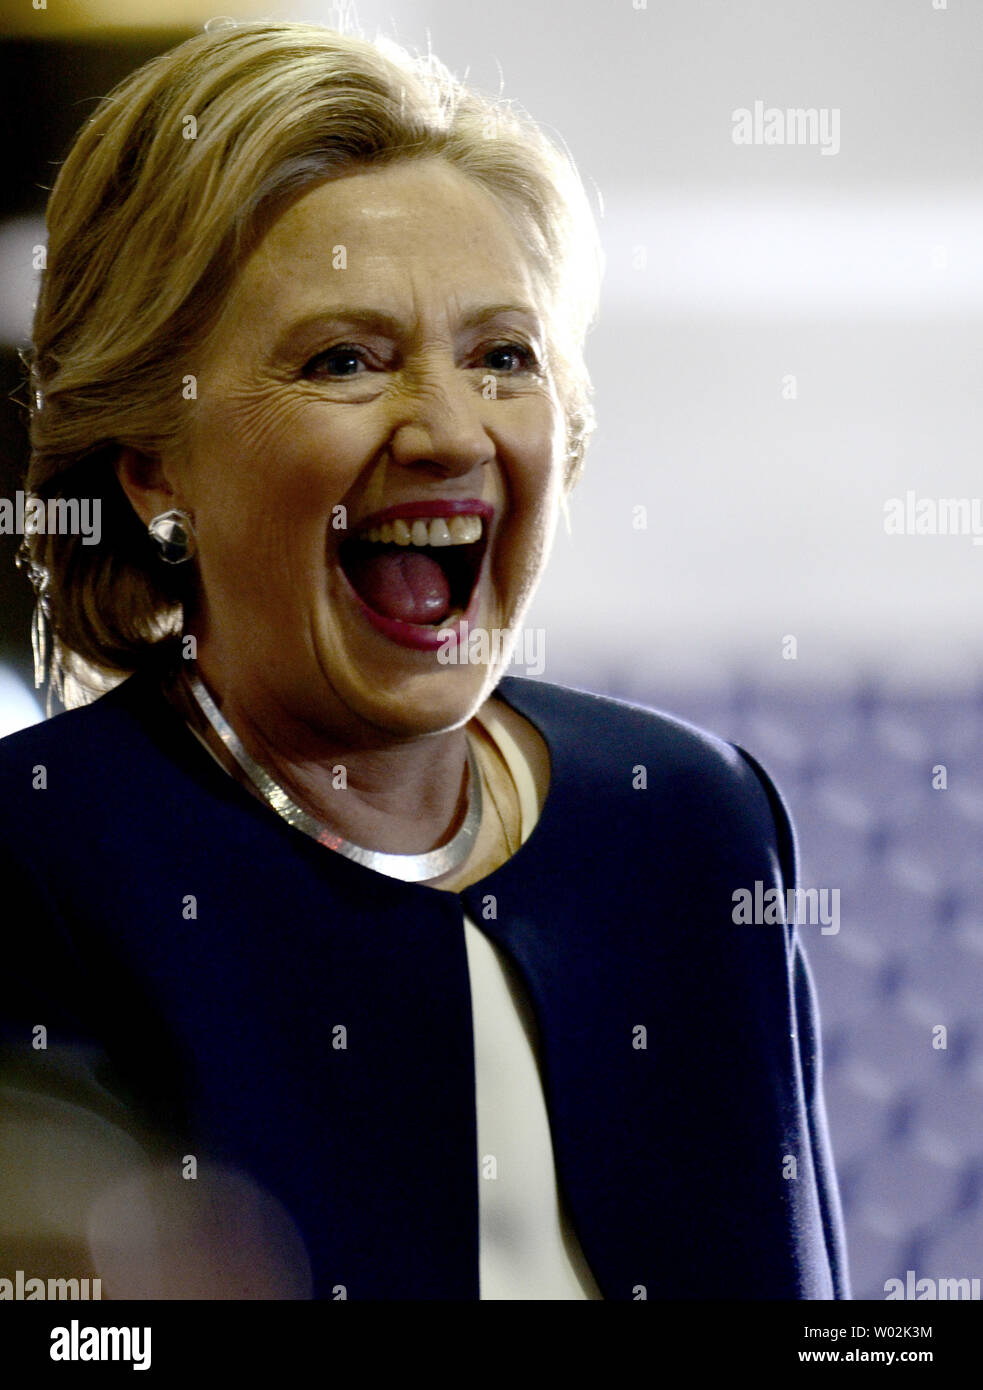 HAHAHAHAHAHAHAHAHAHAHAHAHA HAHAHAHAHAHAHAHAHAHA - Hillary Clinton Laughs